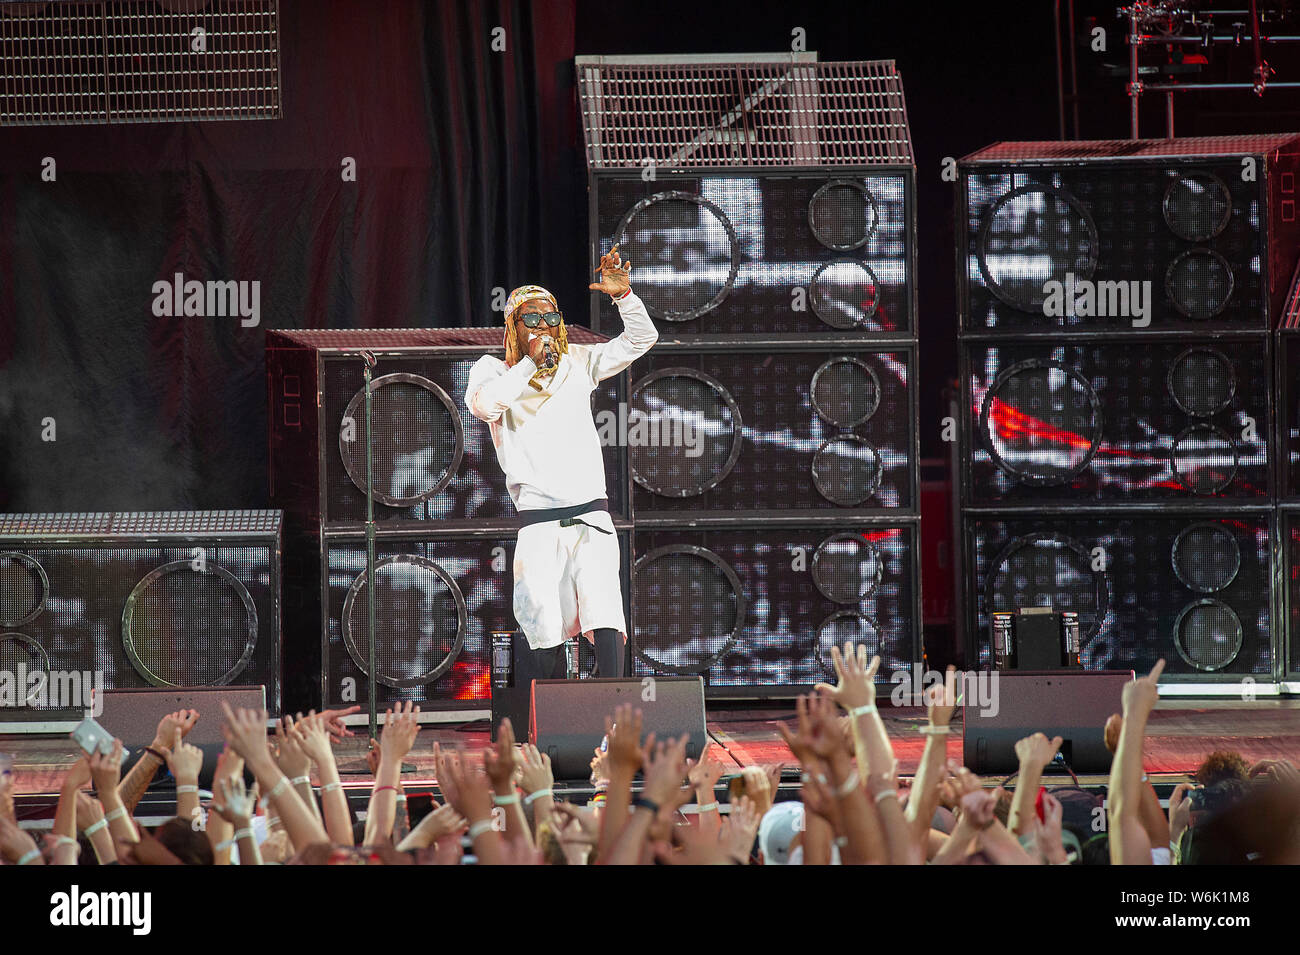 August 01, 2019: Lil Wayne American Rapper performs at Austin 360 Amphitheater, Circuit of The Americas. Austin, Texas. Mario Cantu/CSM. Stock Photo